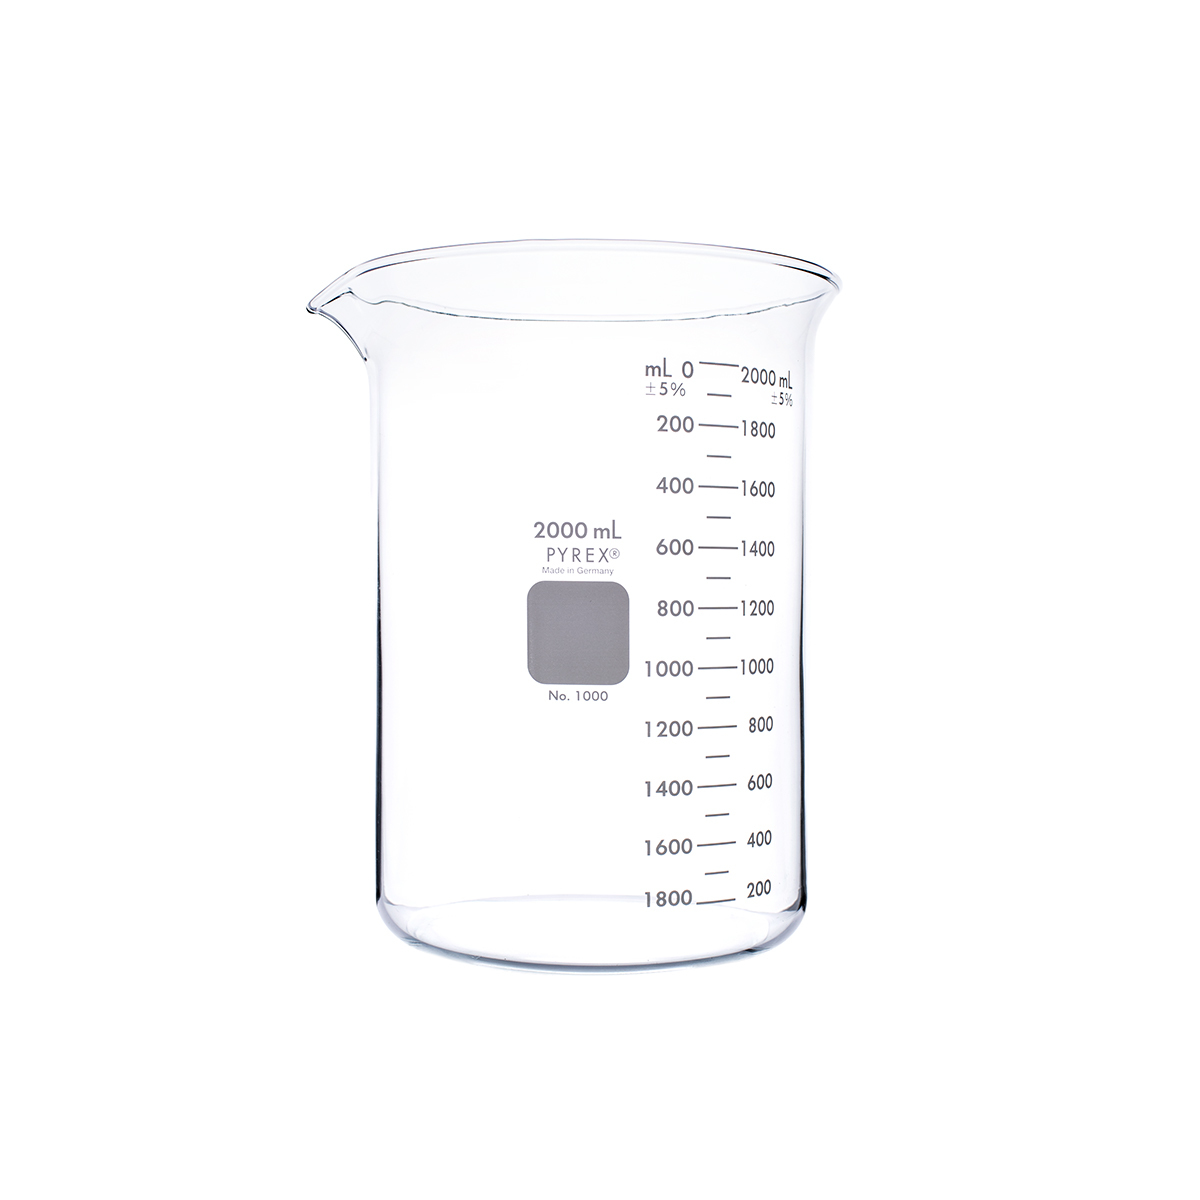 PYREX Griffin Borosilicate Glass Beaker - Low Form Graduated Measuring  Beaker with Spout – Premium Scientific Glassware for Laboratories,  Classrooms or Home Use - PYREX Chemistry Glassware, 2L, 2/Pk